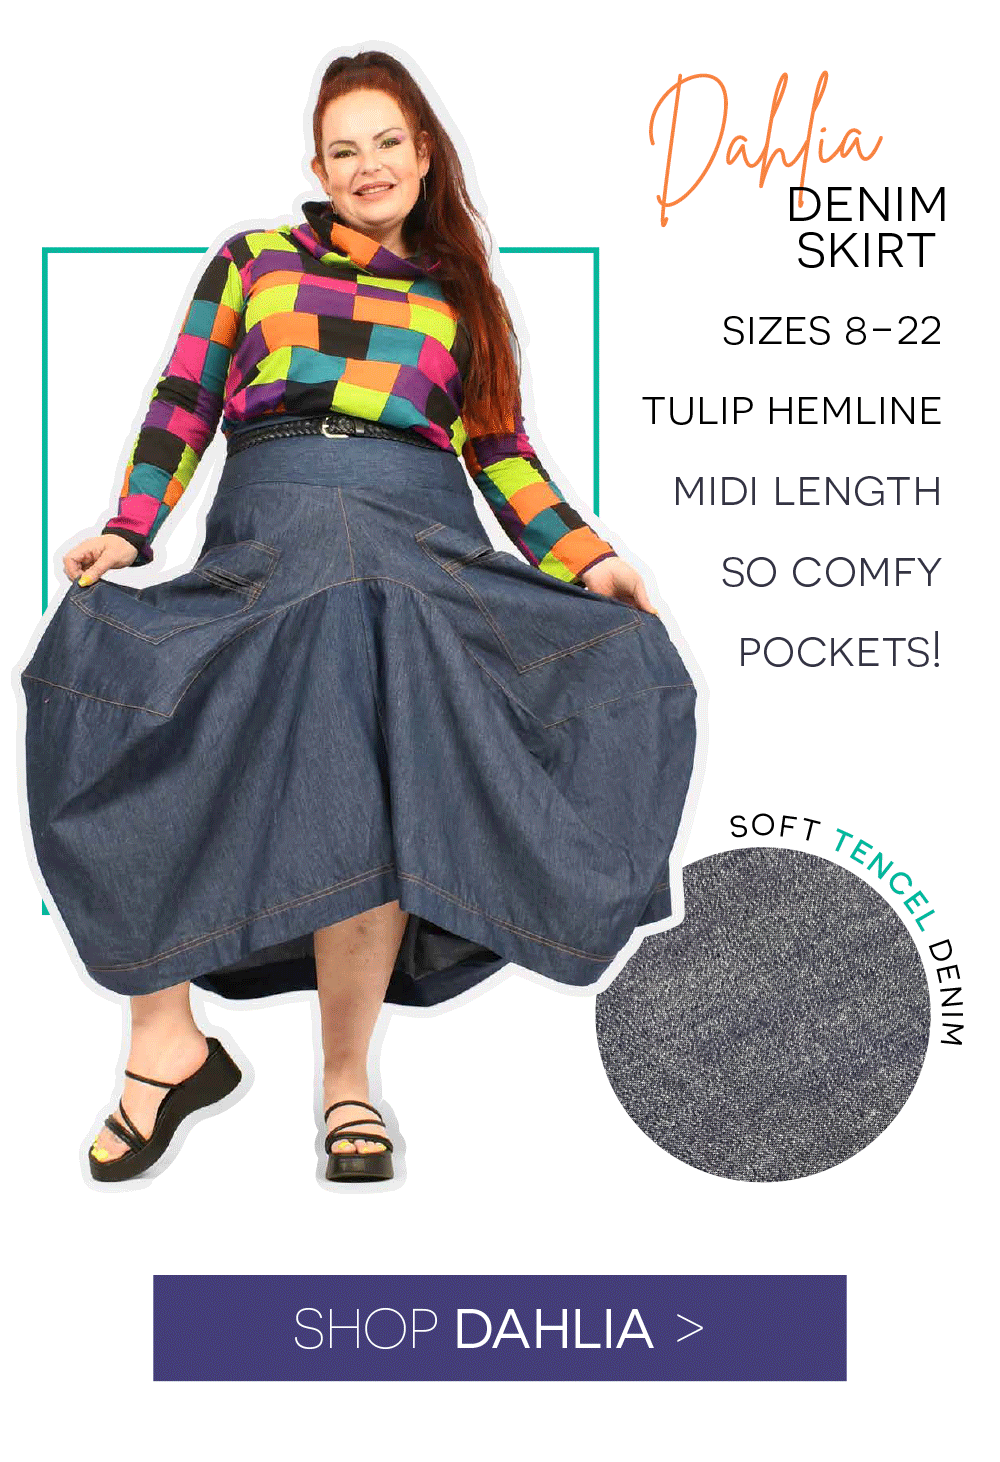 Dahlia denim skirt, sizes 8-22, tulip hemline, midi length, so comfy, with pockets!